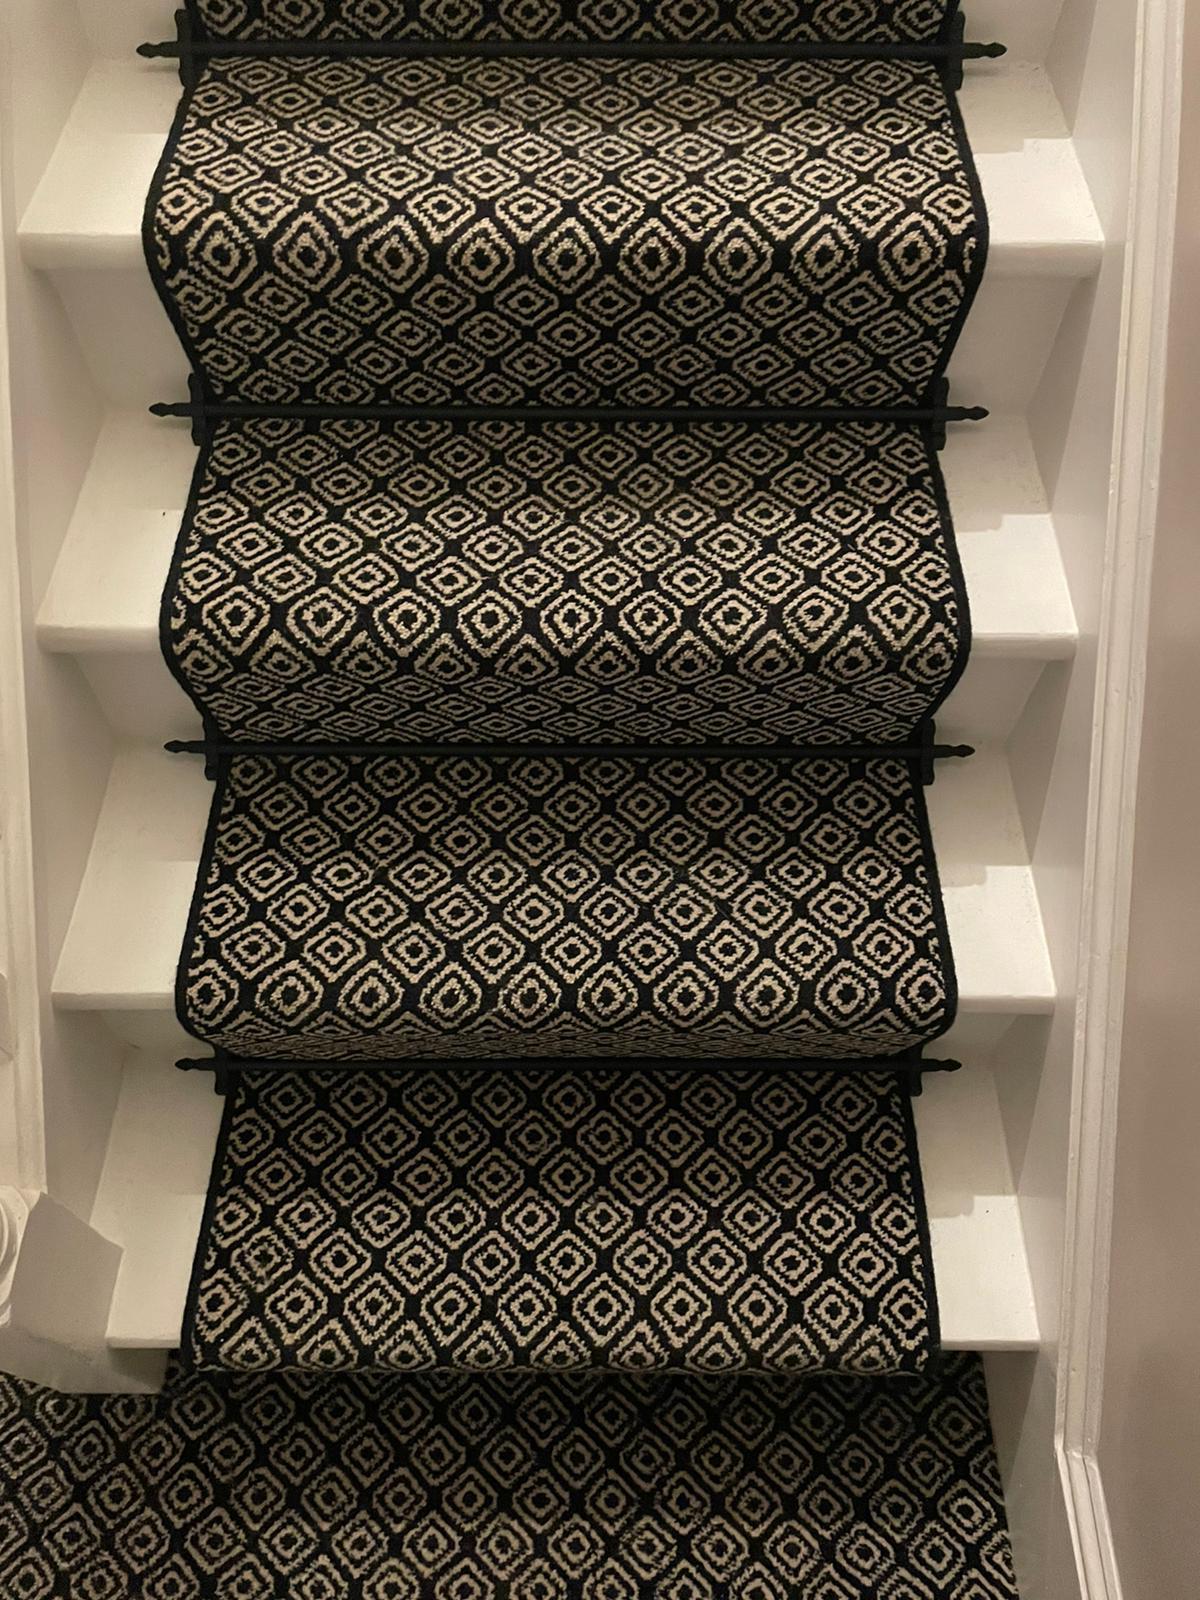 Black and white geometric pattern carpet stair runner wool blend